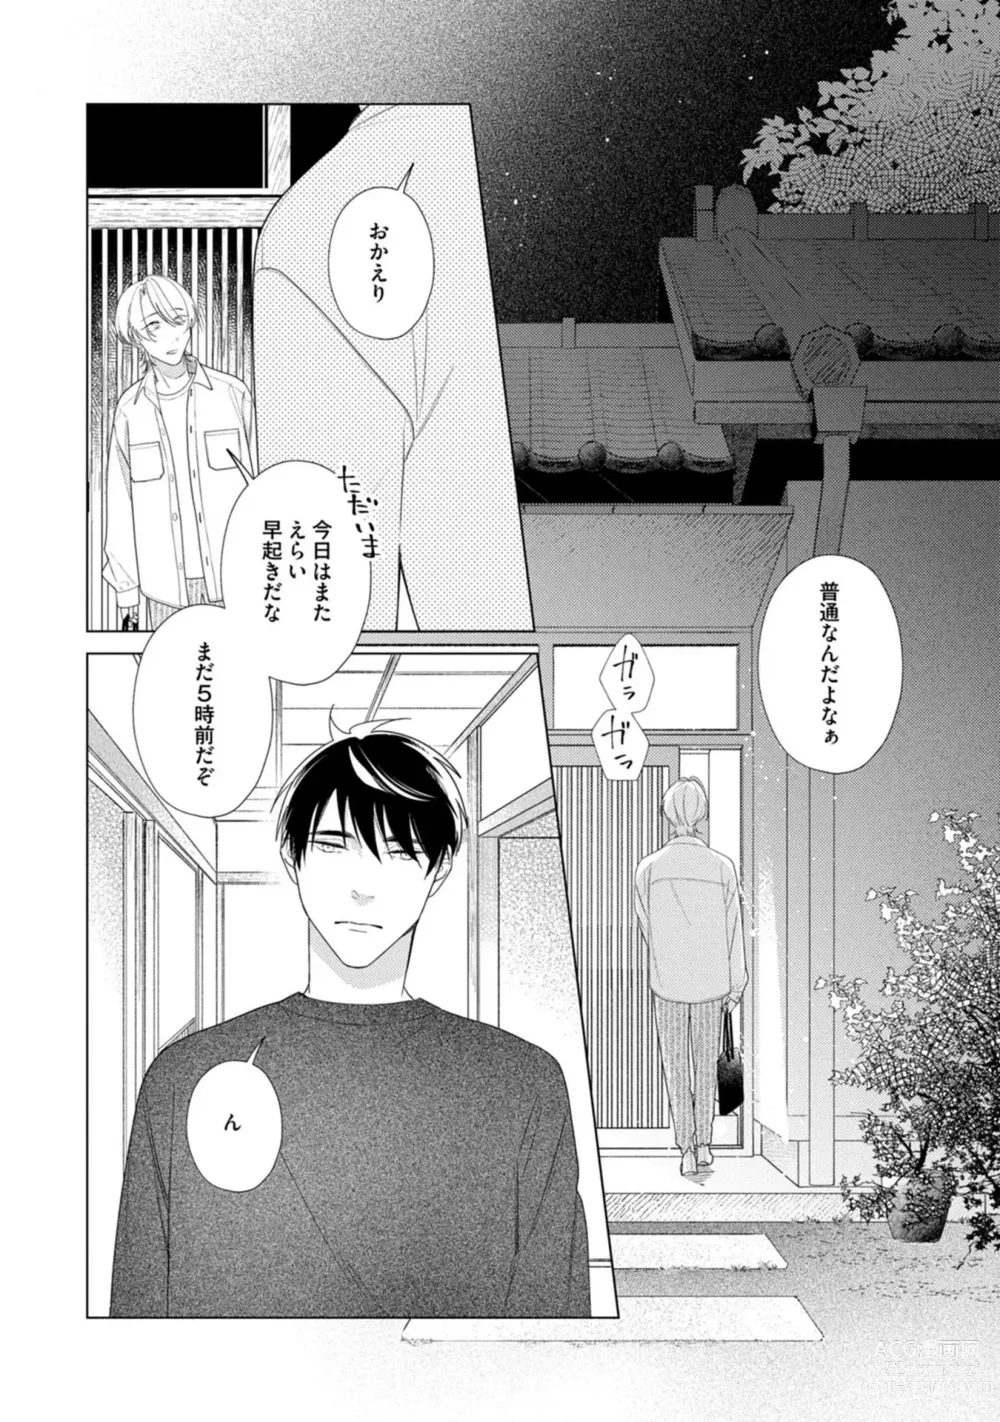 Page 6 of manga Yoru mo, Asa mo